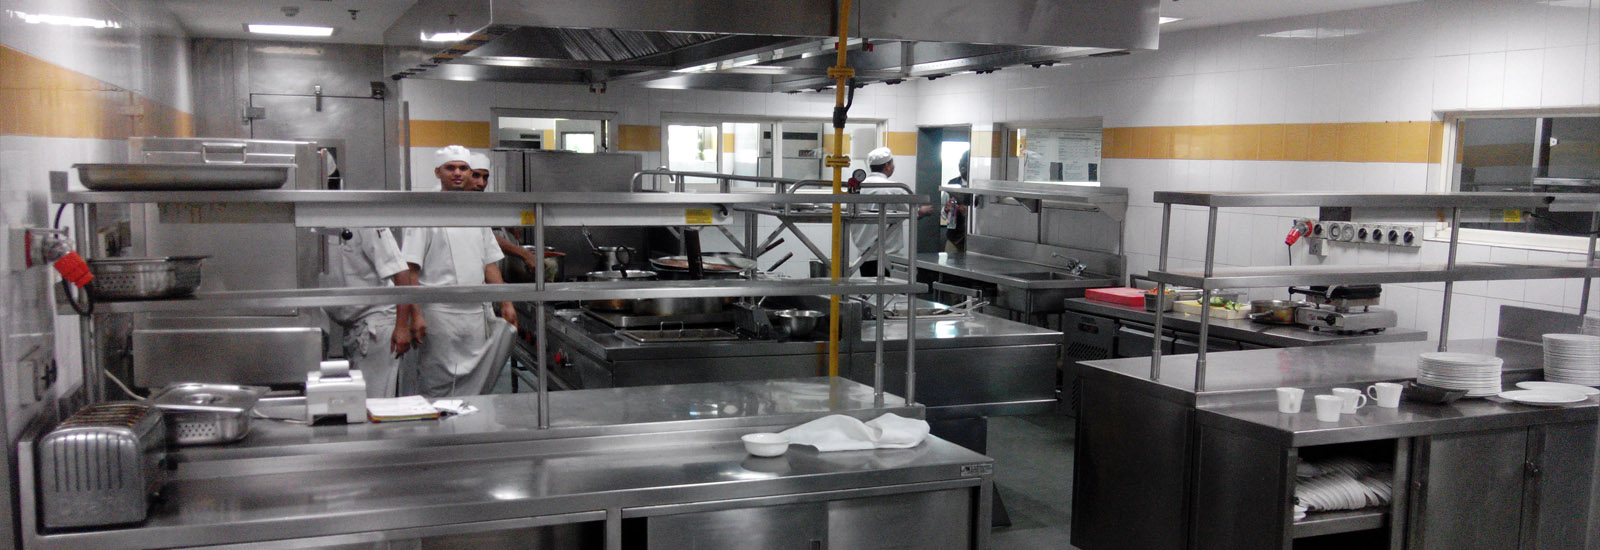 kitchen equipments manufacturer in Bangalore